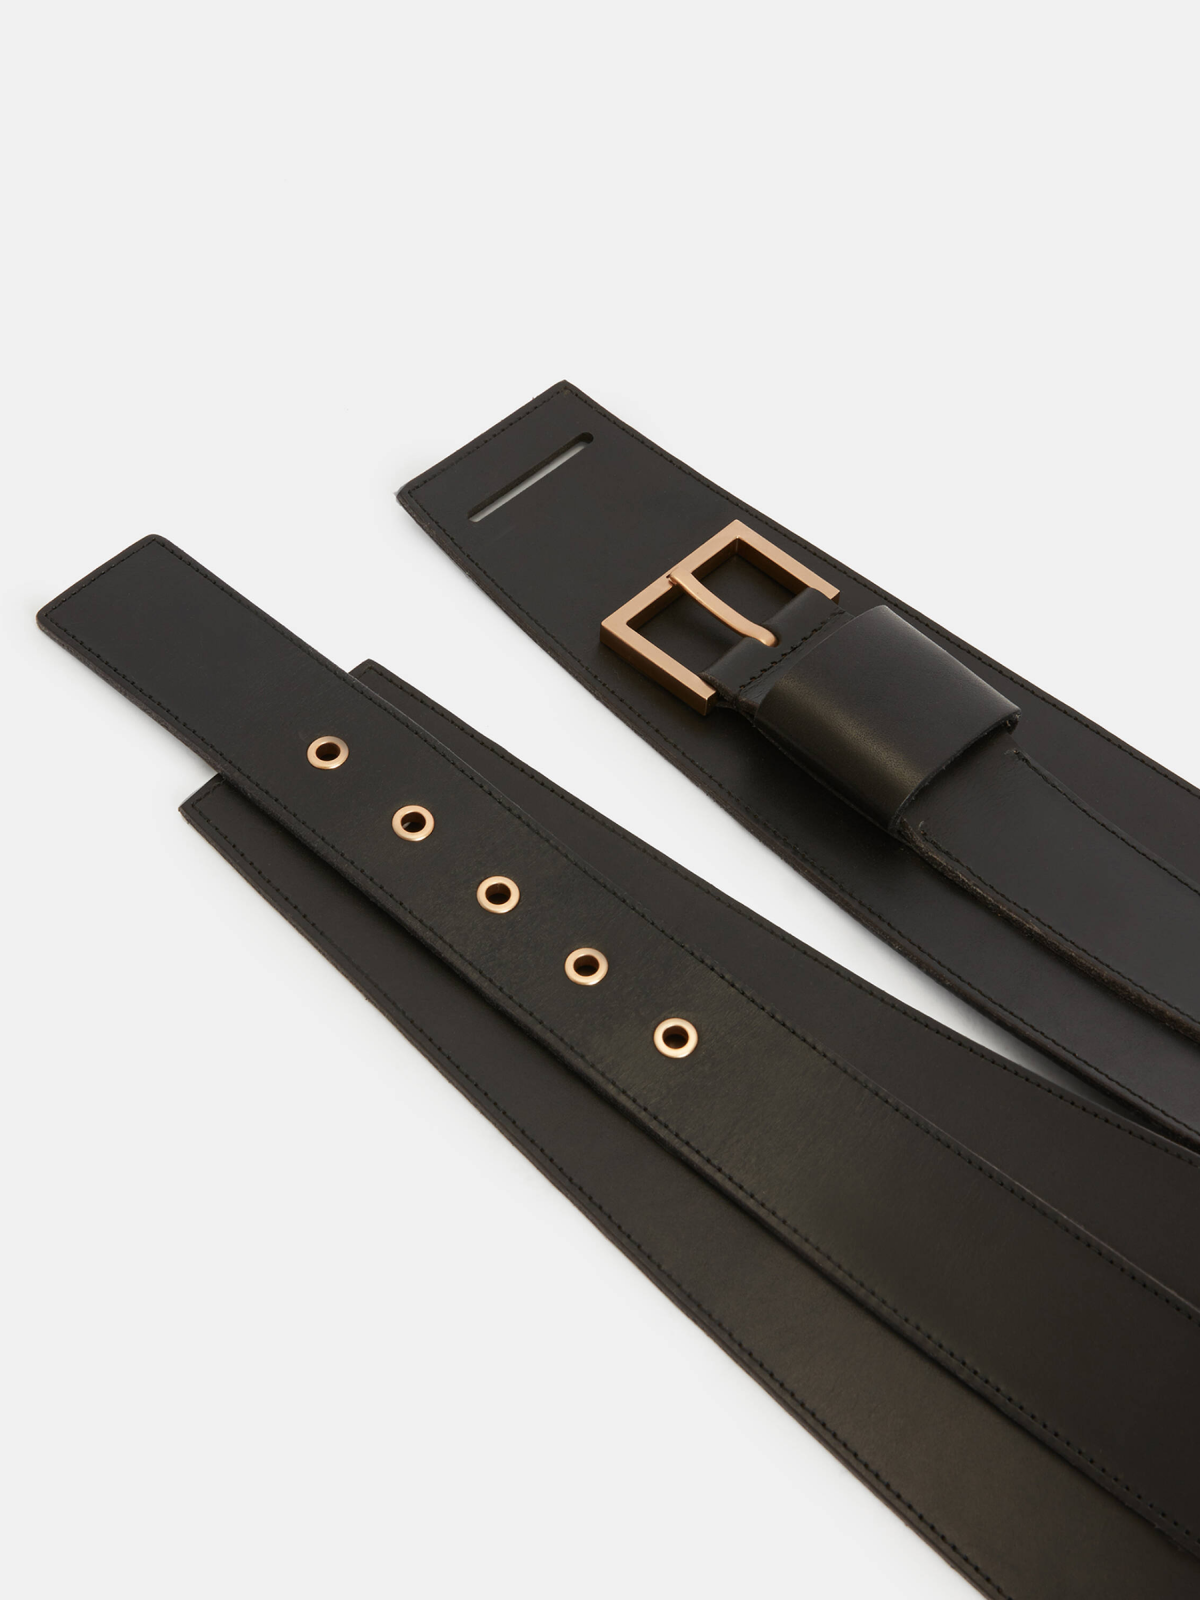 Harlow Leather Waist Belt